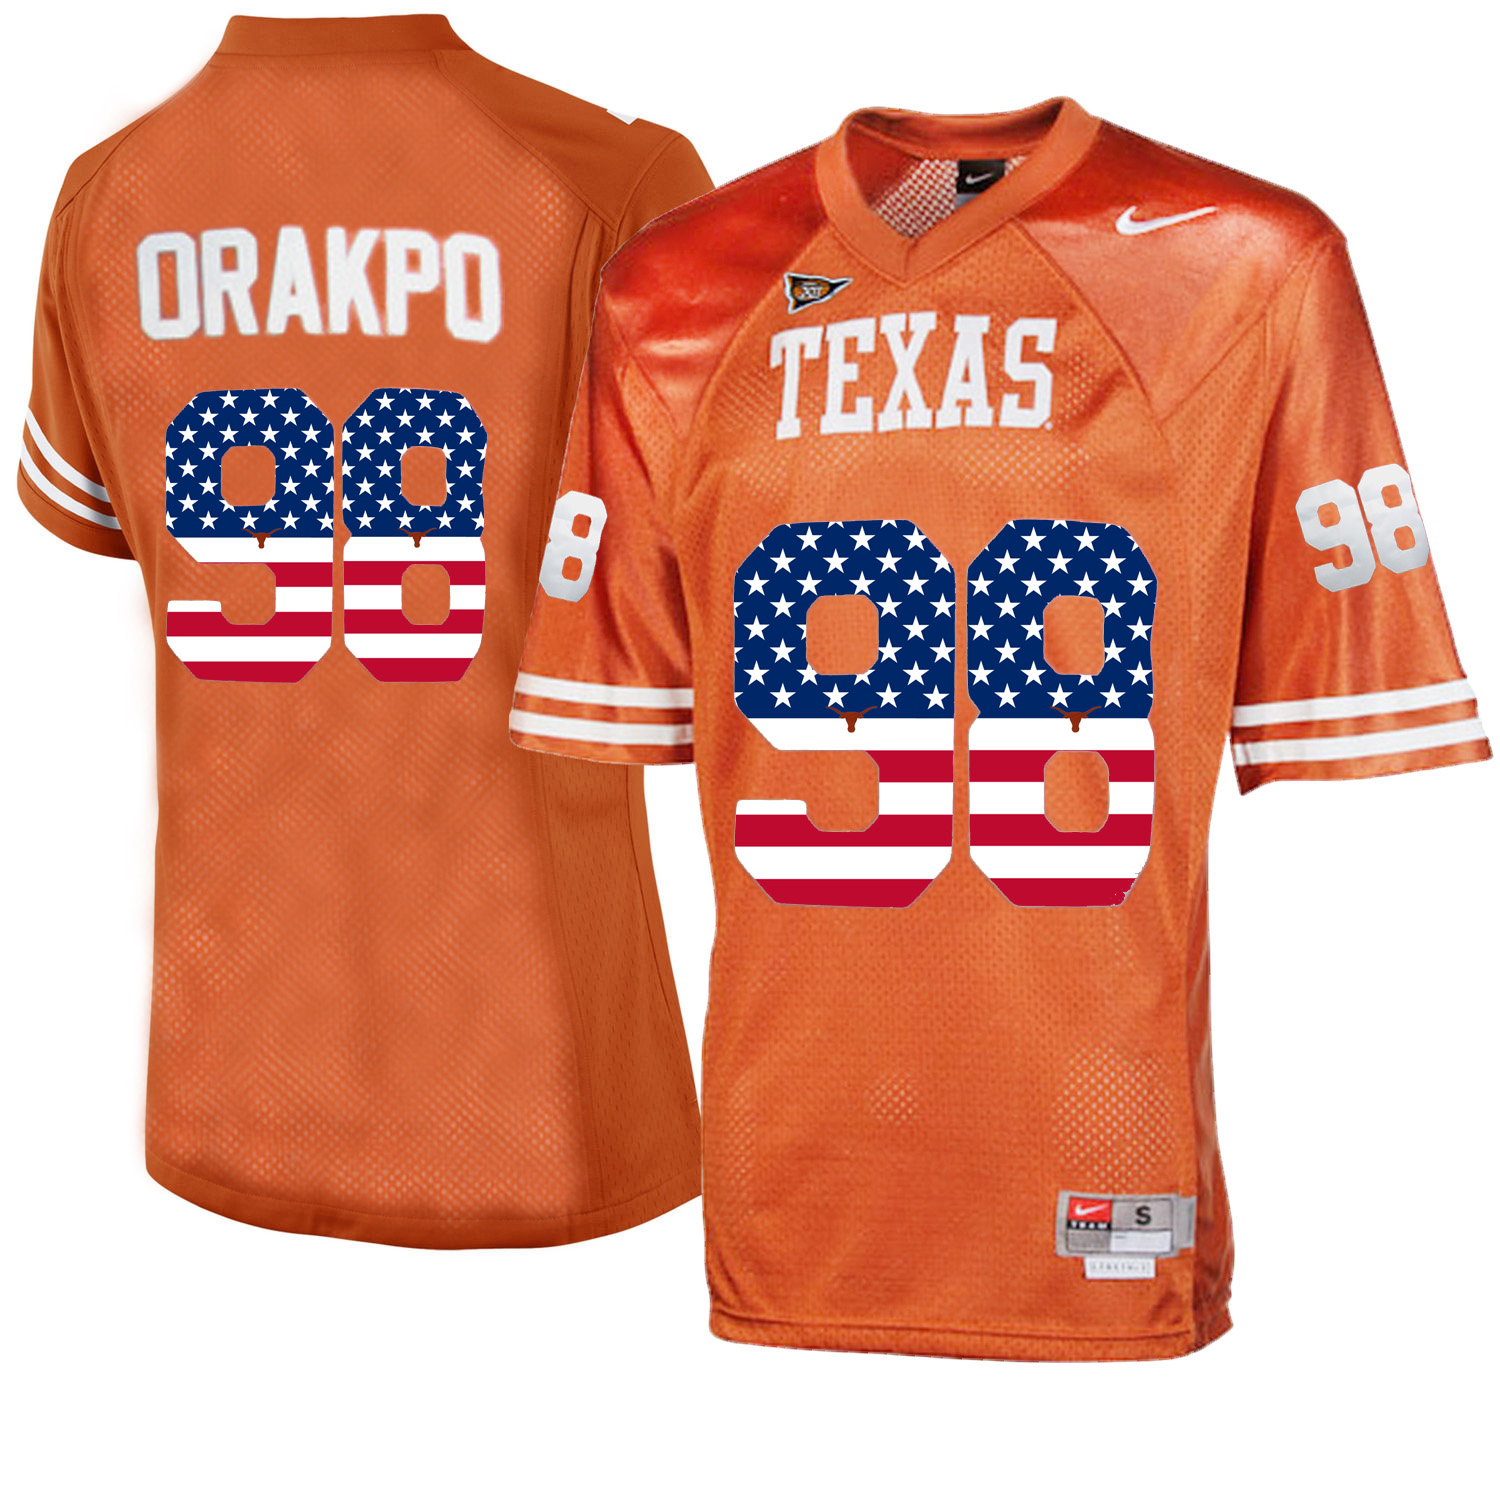 Texas Longhorns 98 Brian Orakpo Orange College Football Throwback Jersey